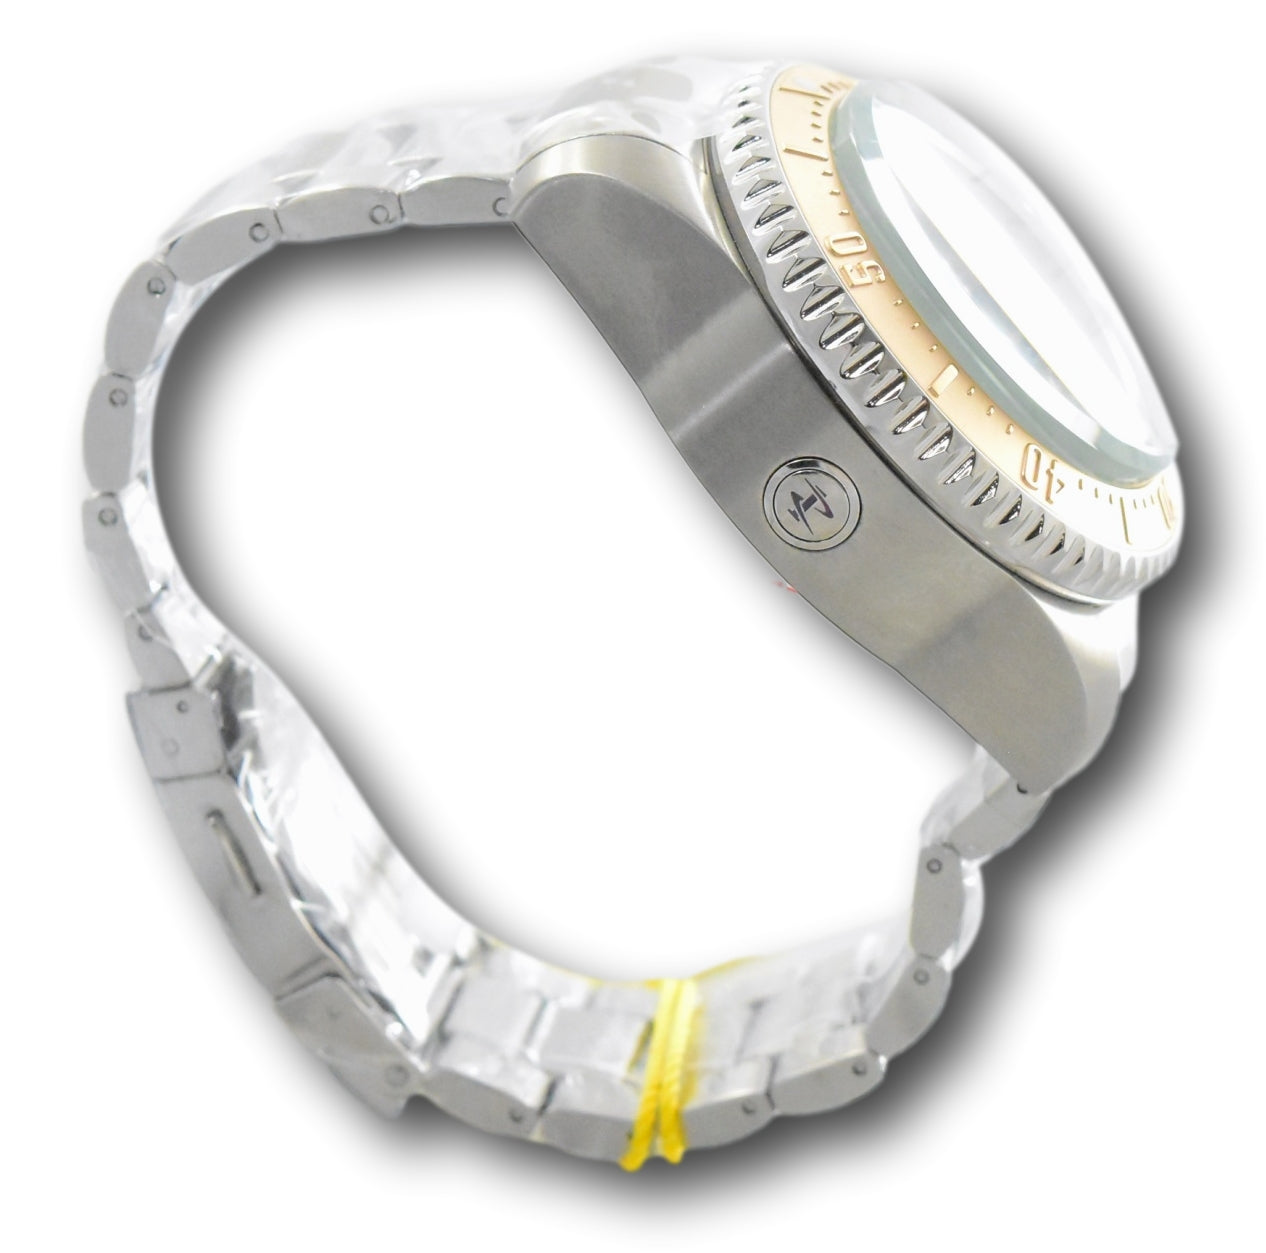 Invicta Reserve Hydromax GMT Men's 52mm Rose Gold SWISS Quartz Watch 16964